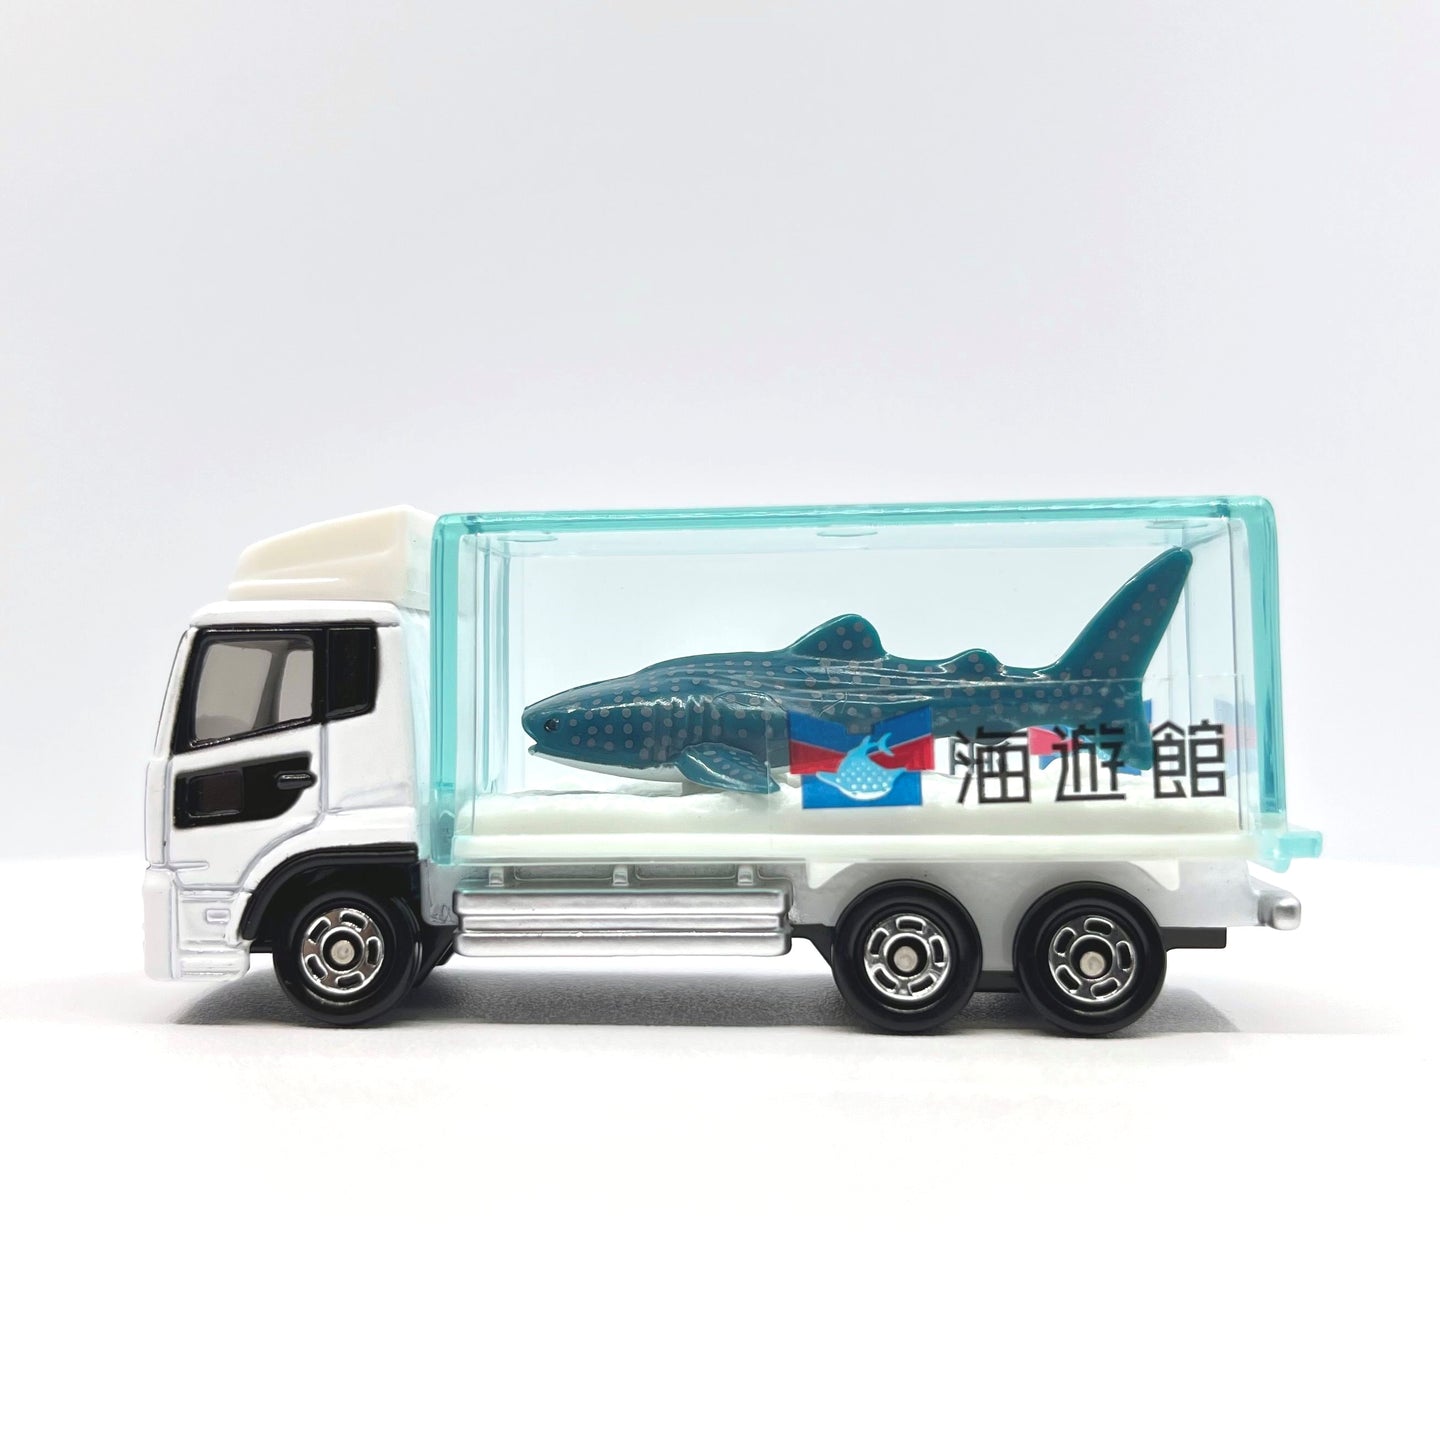 Nissan Diesel Quon Aquarium Truck Alloy 2-3 inch Diecast Car Model by Takara Tomy